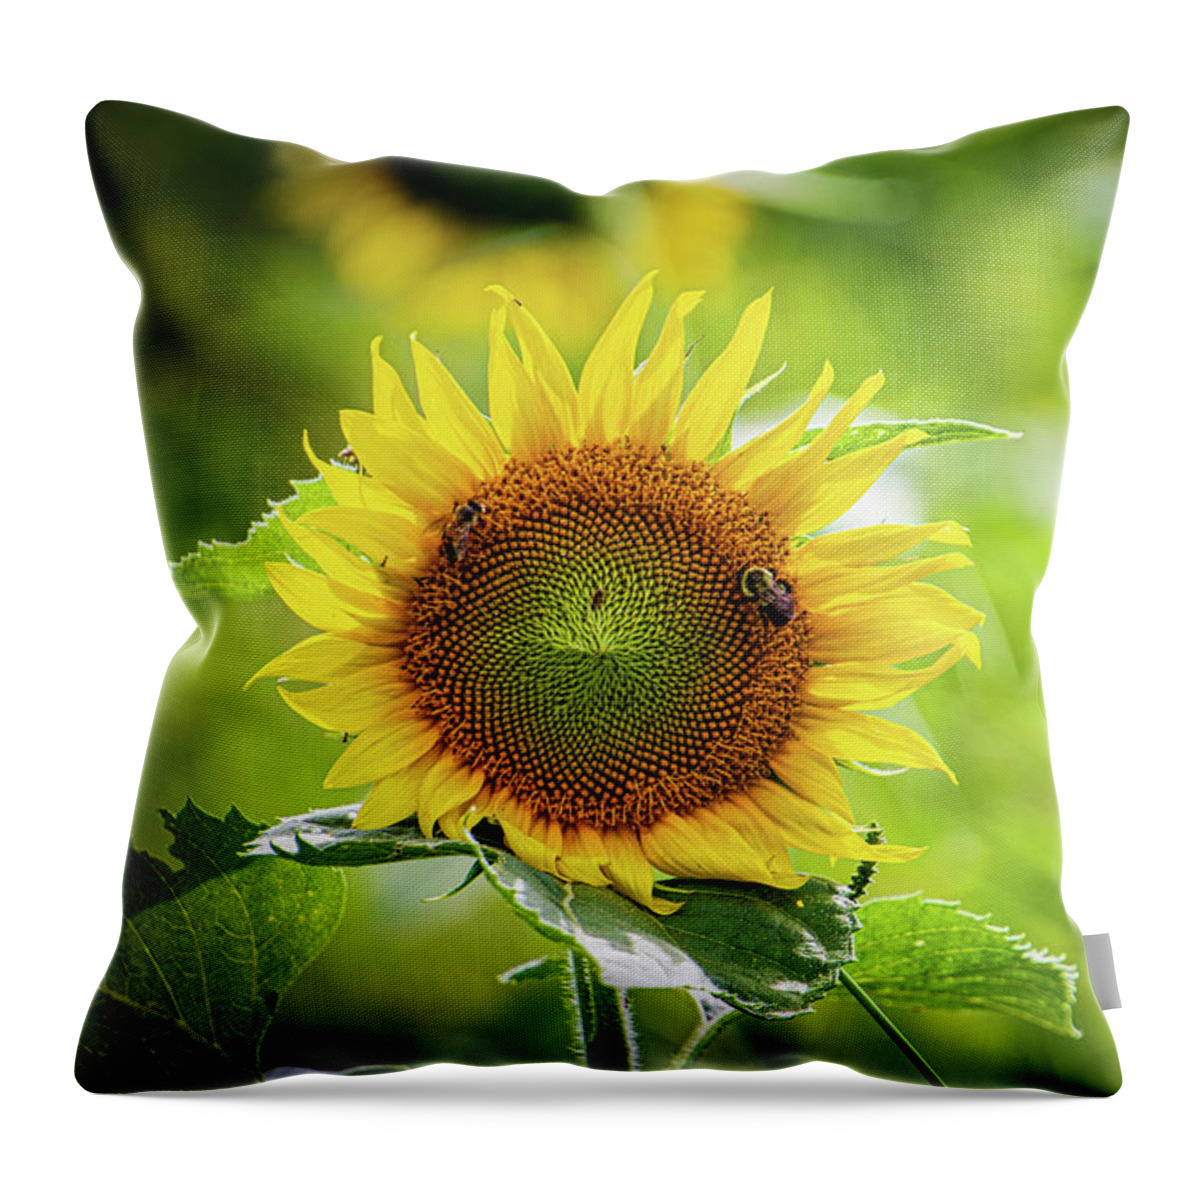 Sunflower Throw Pillow featuring the photograph Sunflower #1 by Randy Bayne